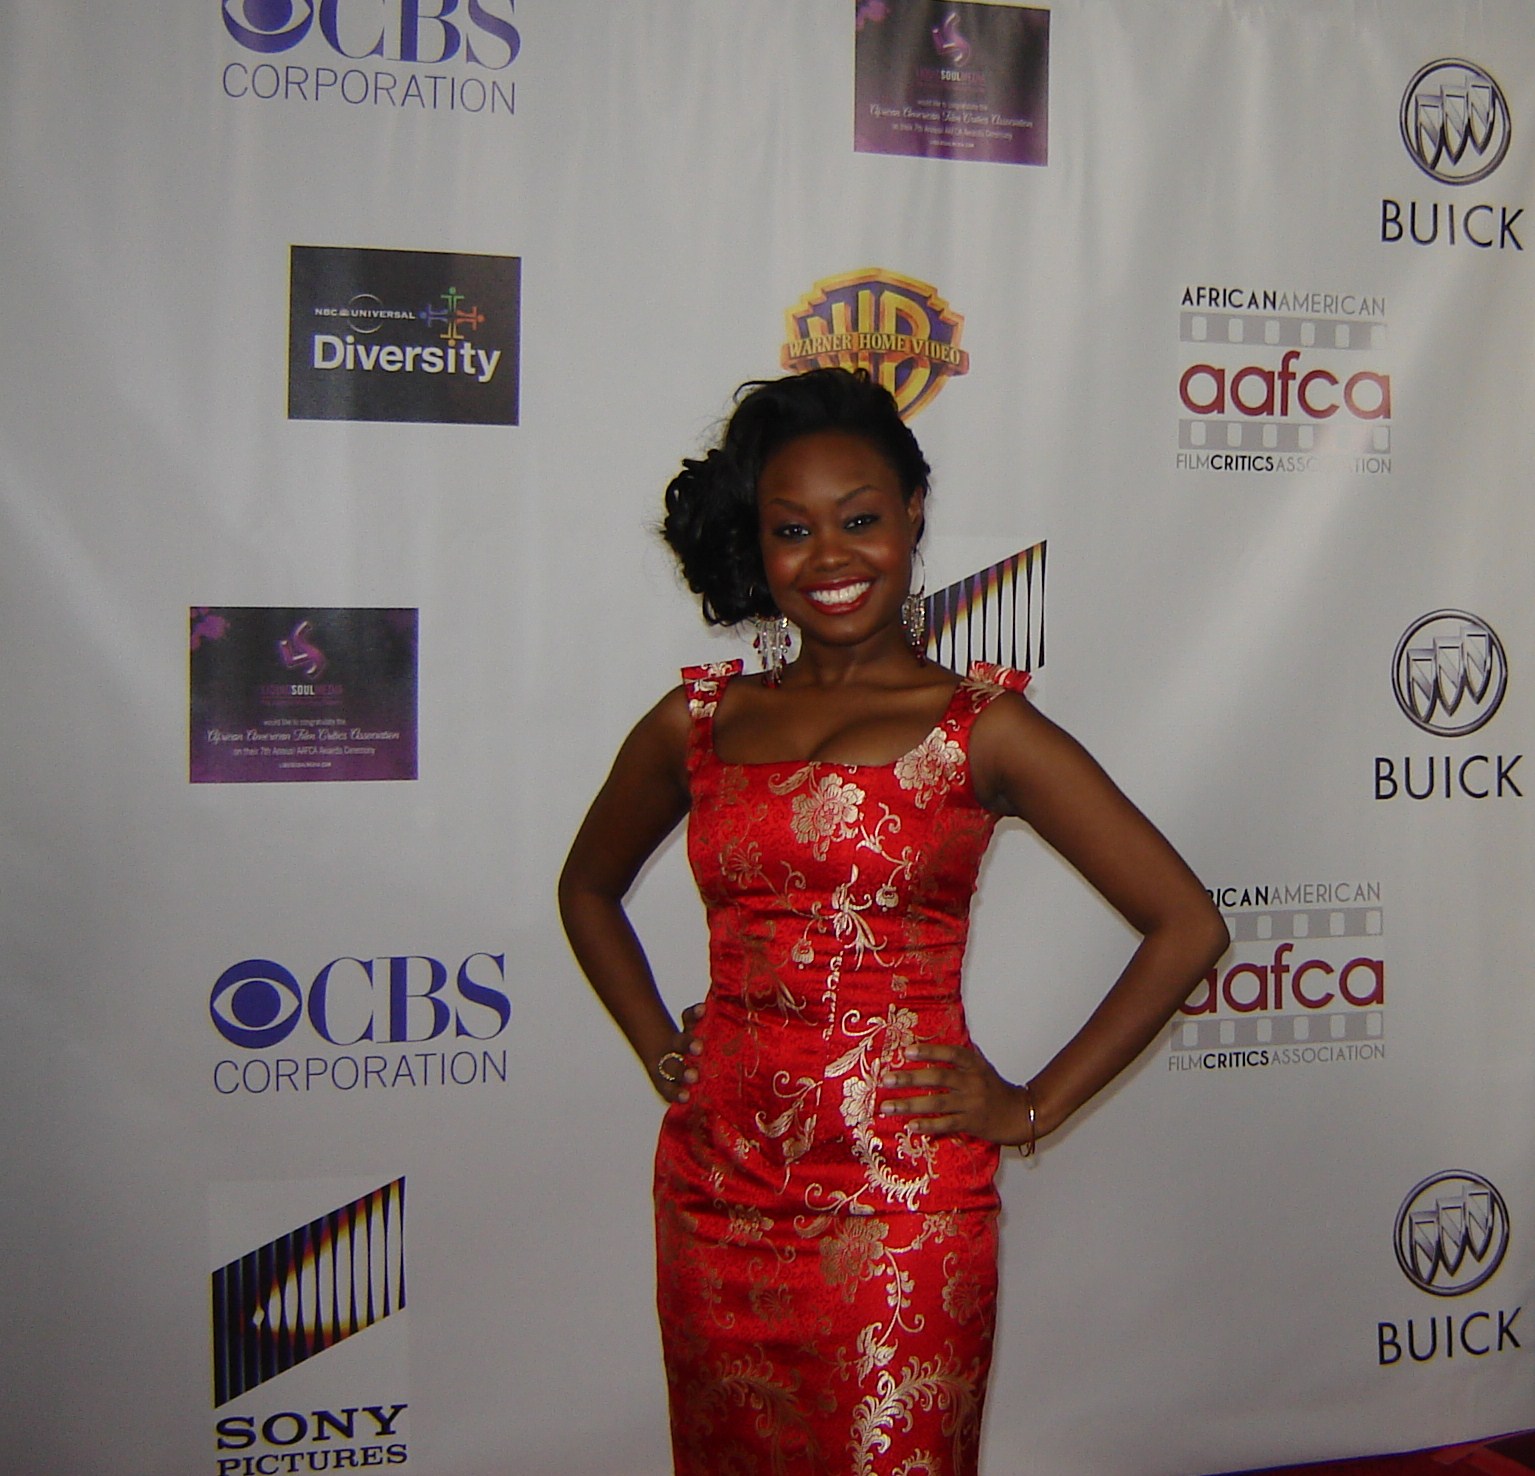 African American Film Critic Awards 2010, wearing Sondra Falk